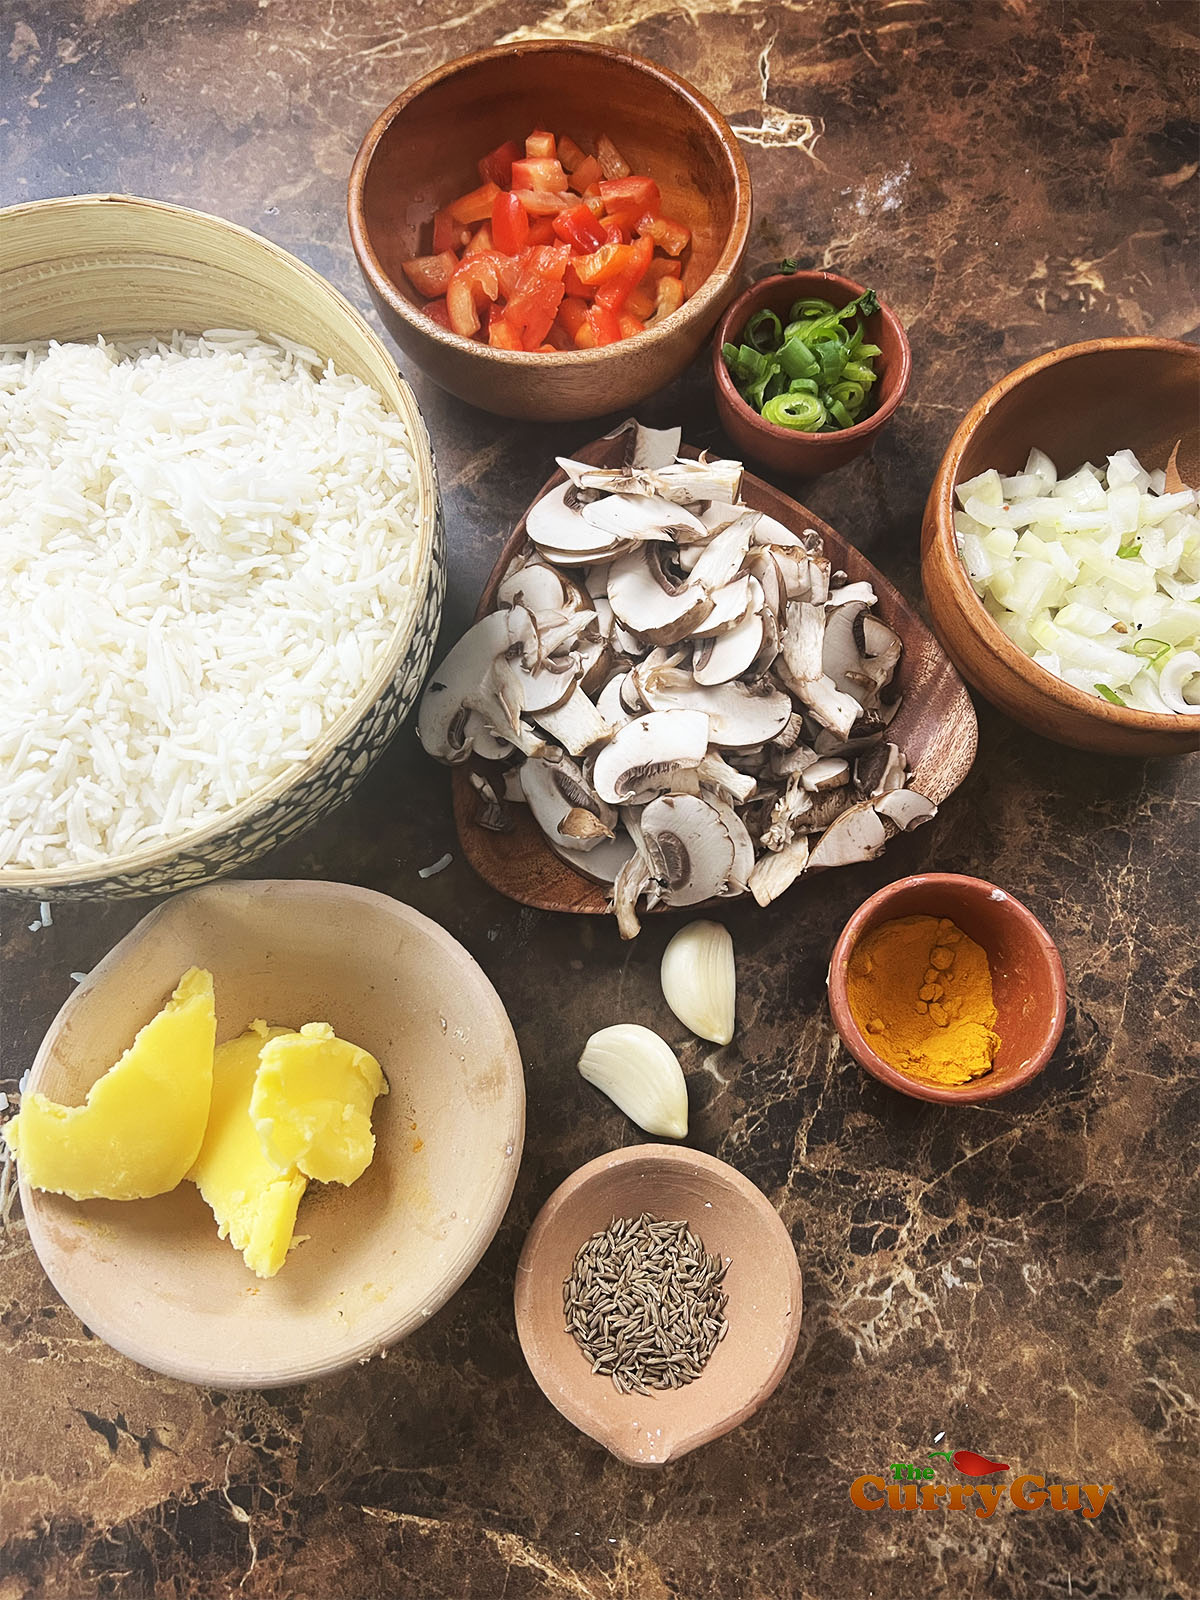 Ingredients for mushroom fried rice.